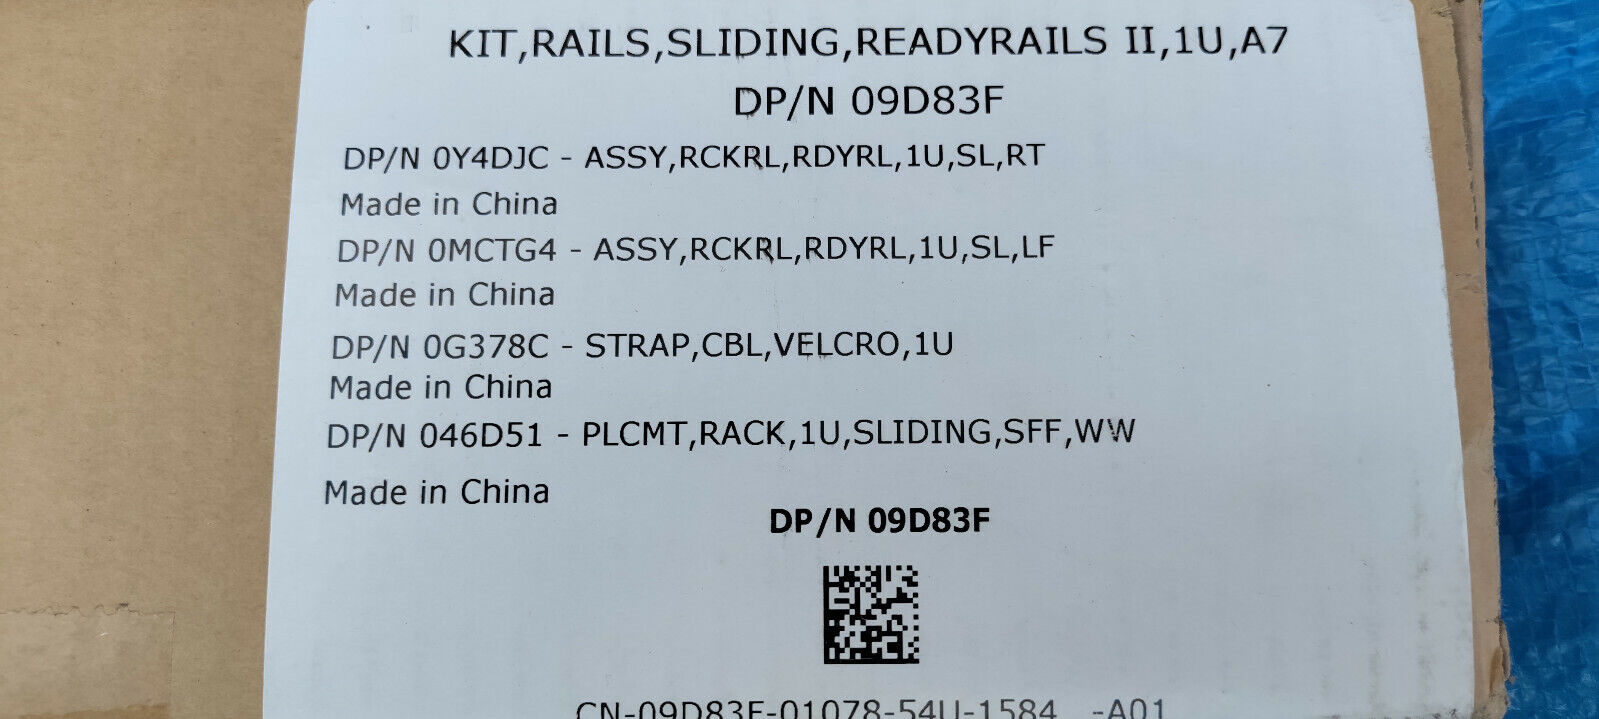 Dell 09D83F Sliding ReadyRails Kit 0Y4DJC, 0MCTG4 POWEREDGE R320 R420, R620 R630